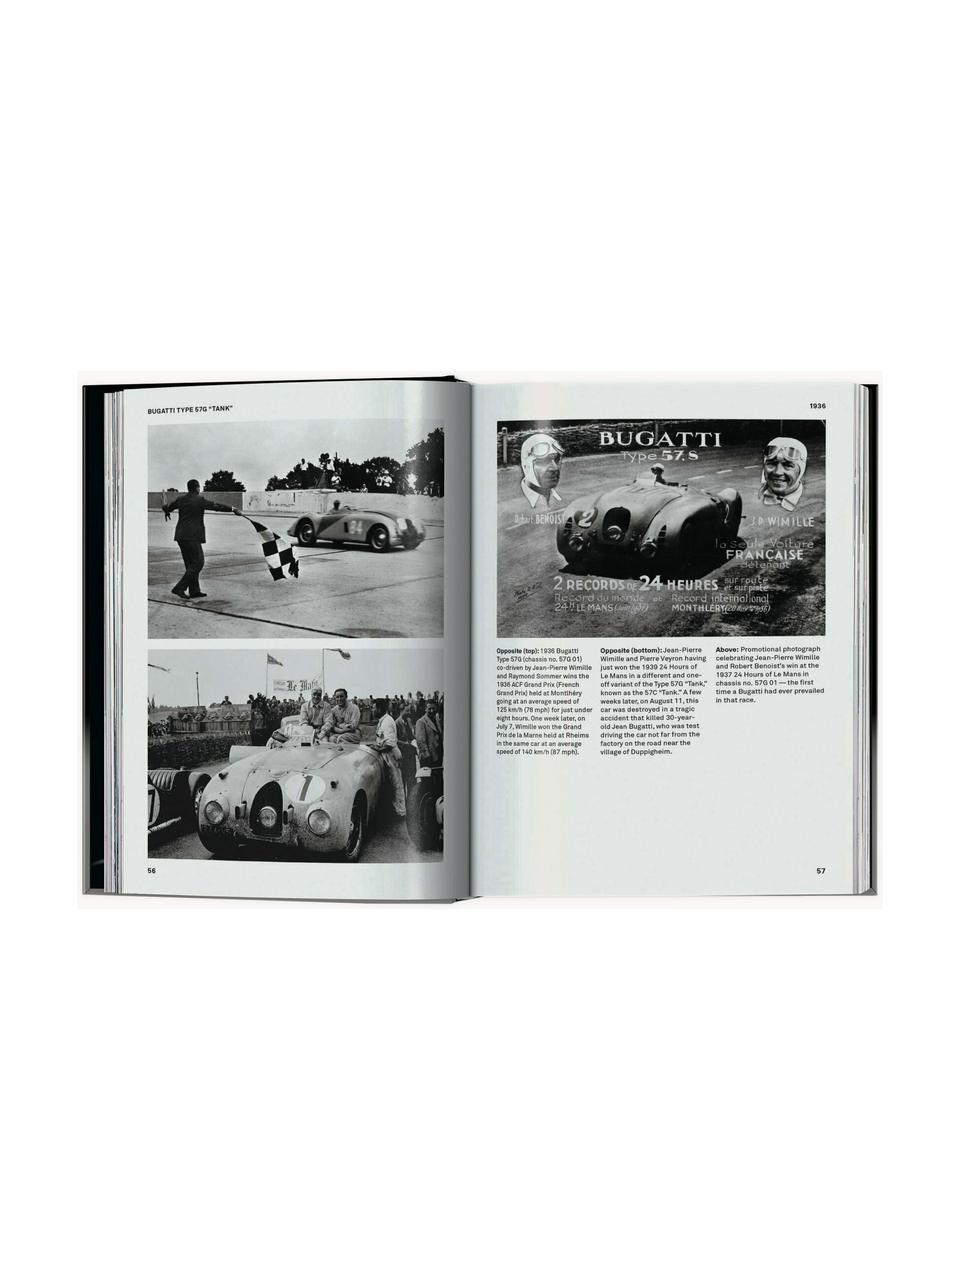 Album 50 Ultimate Sports Cars: 1910s to Present, Papier, twarda okładka, 50 Ultimate Sports Cars, S 16 x W 22 cm